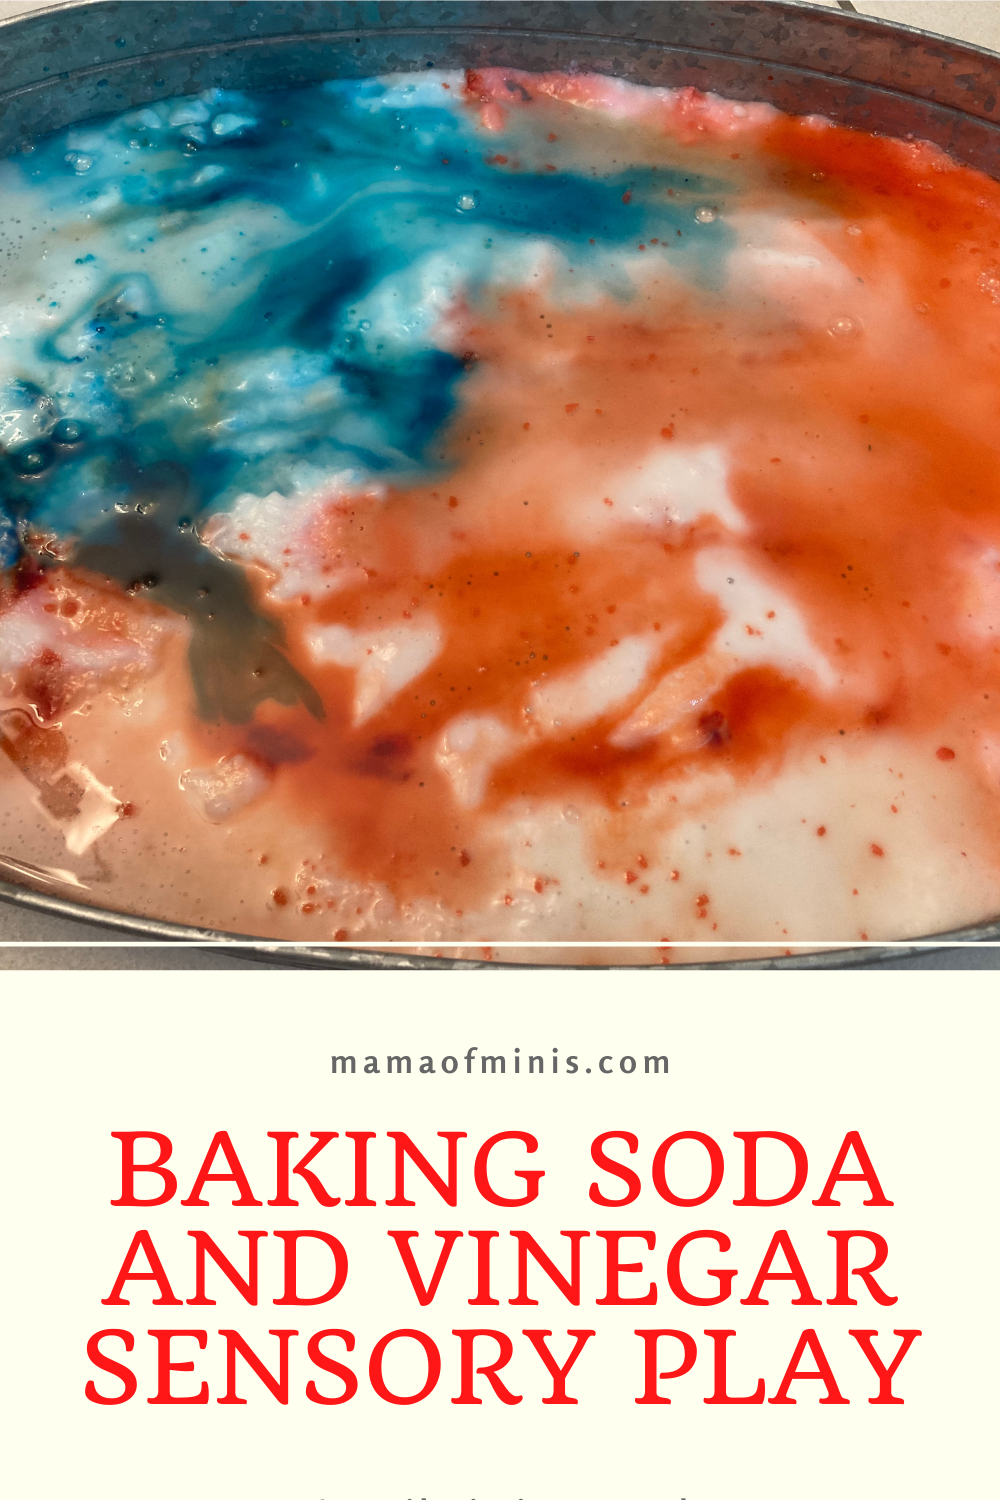 Baking Soda and Vinegar Sensory Play